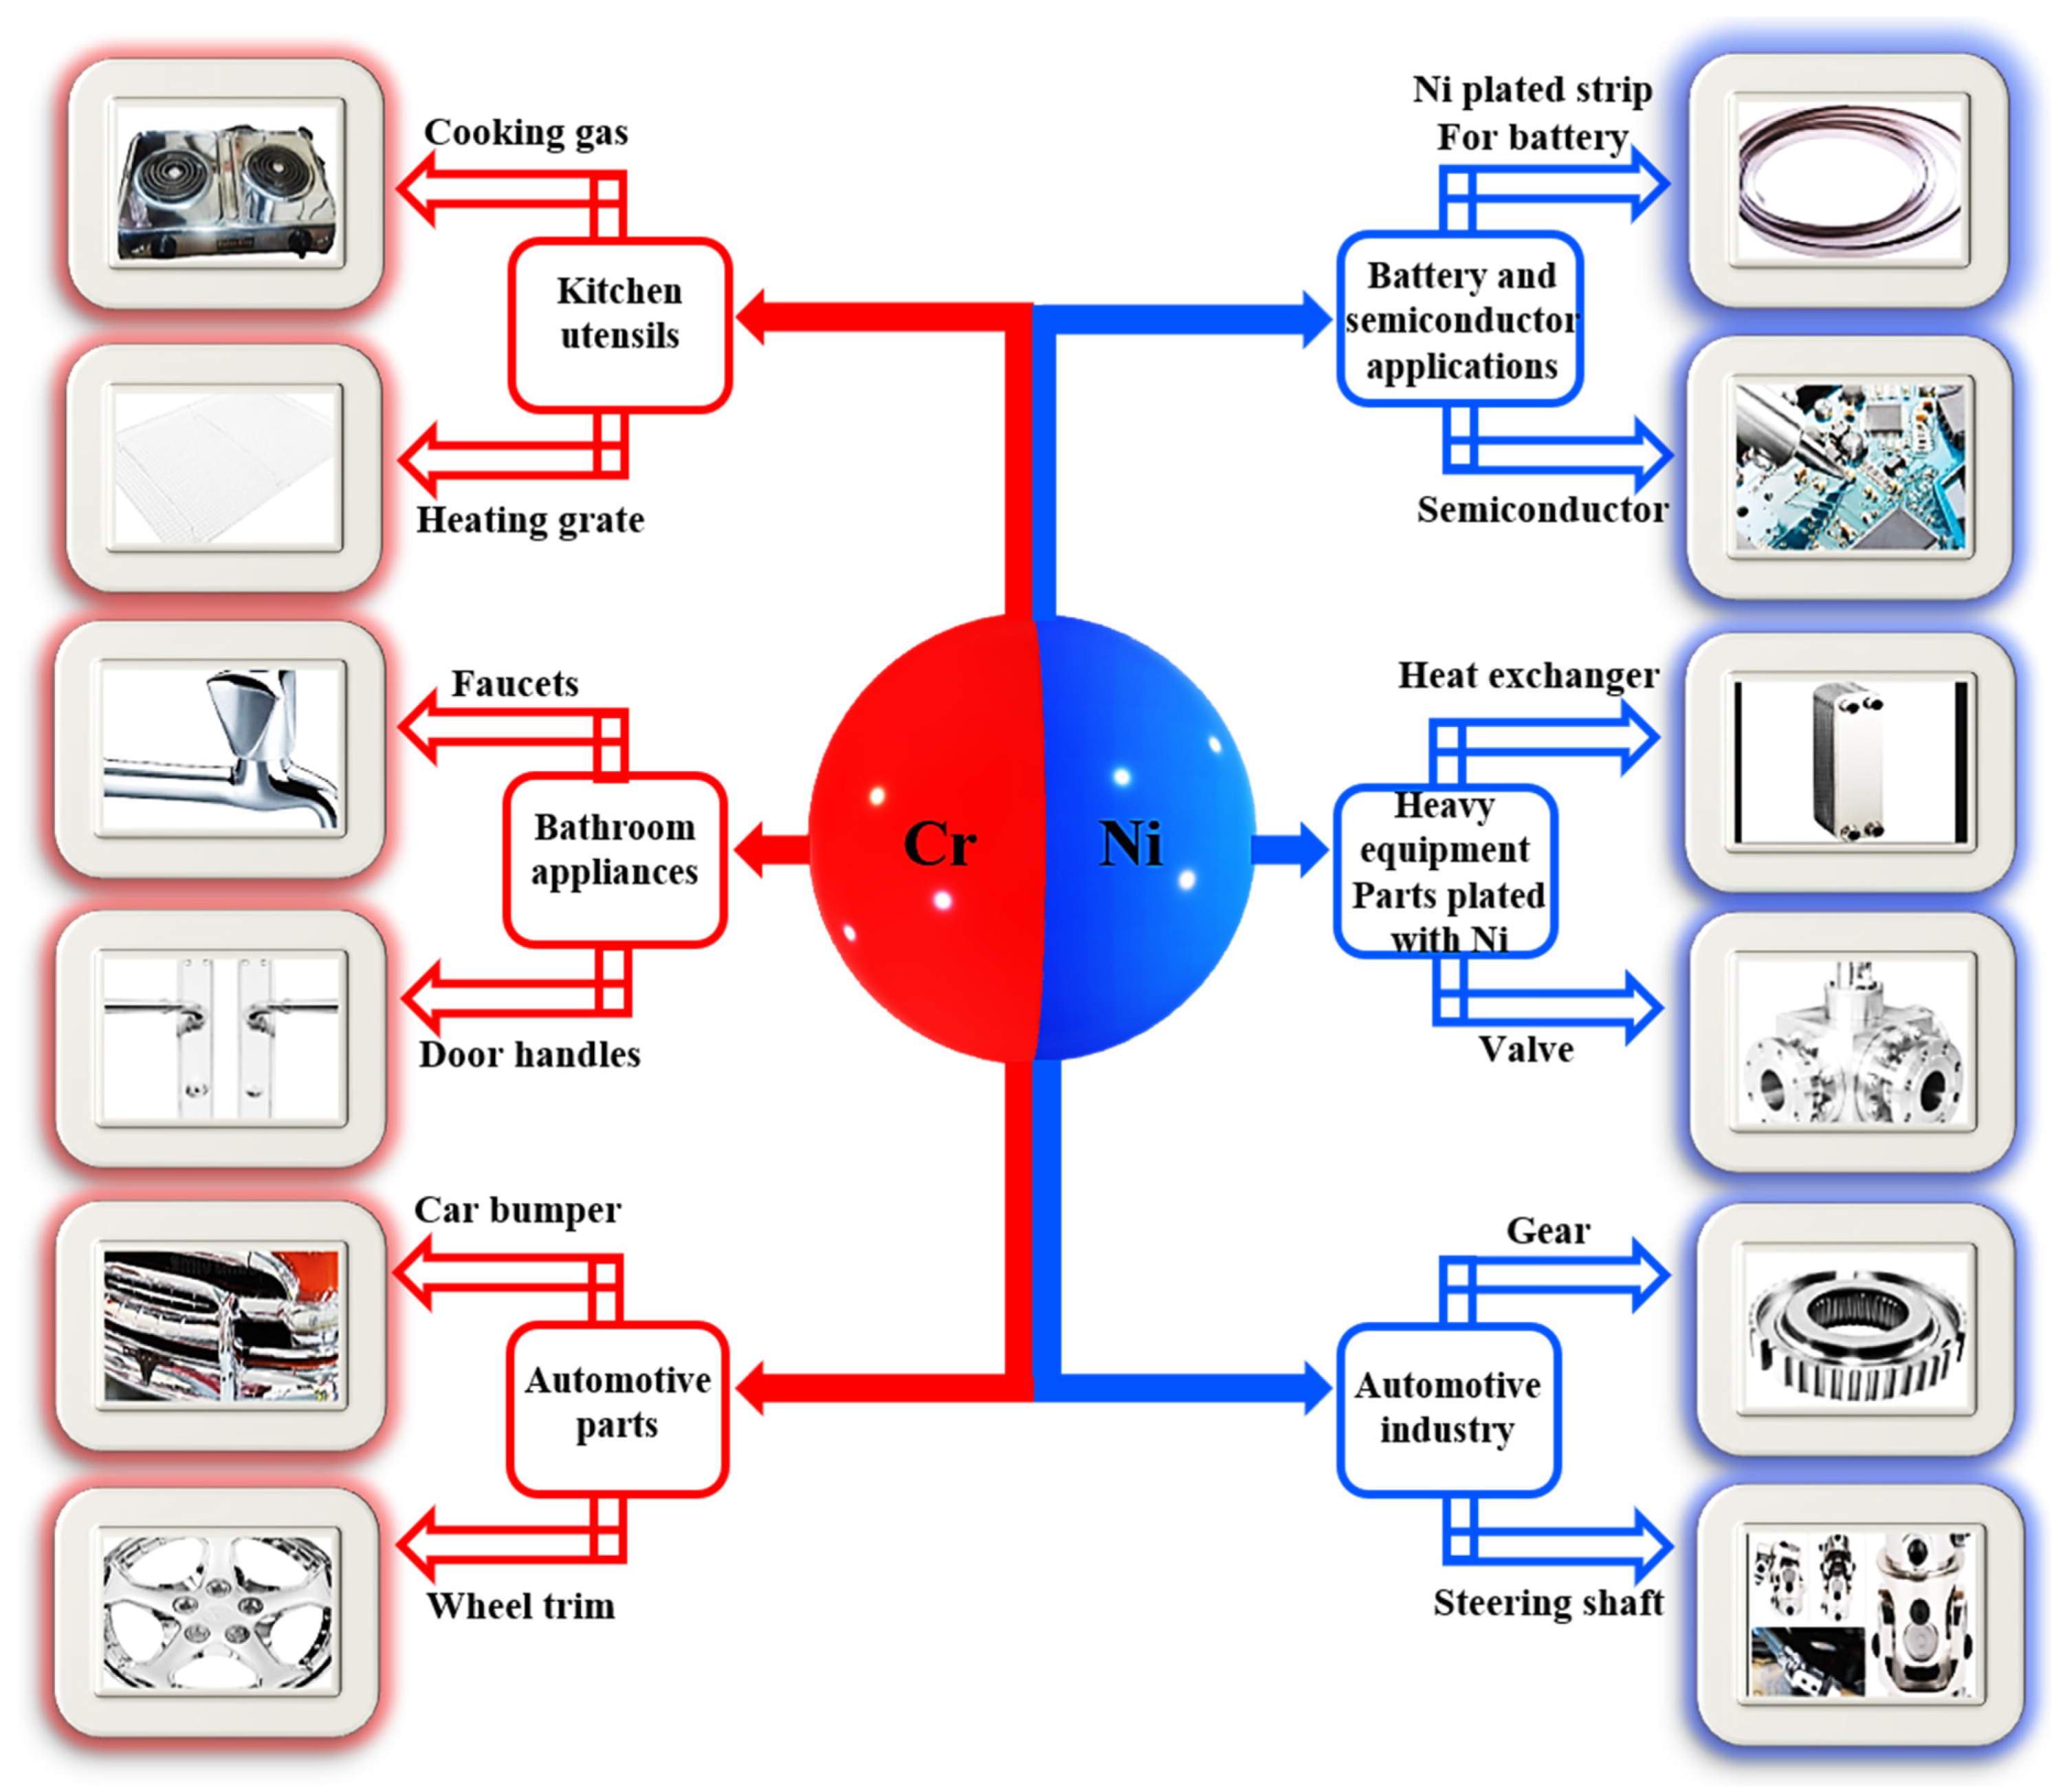 Electroplating 101: How Plating Metals Works